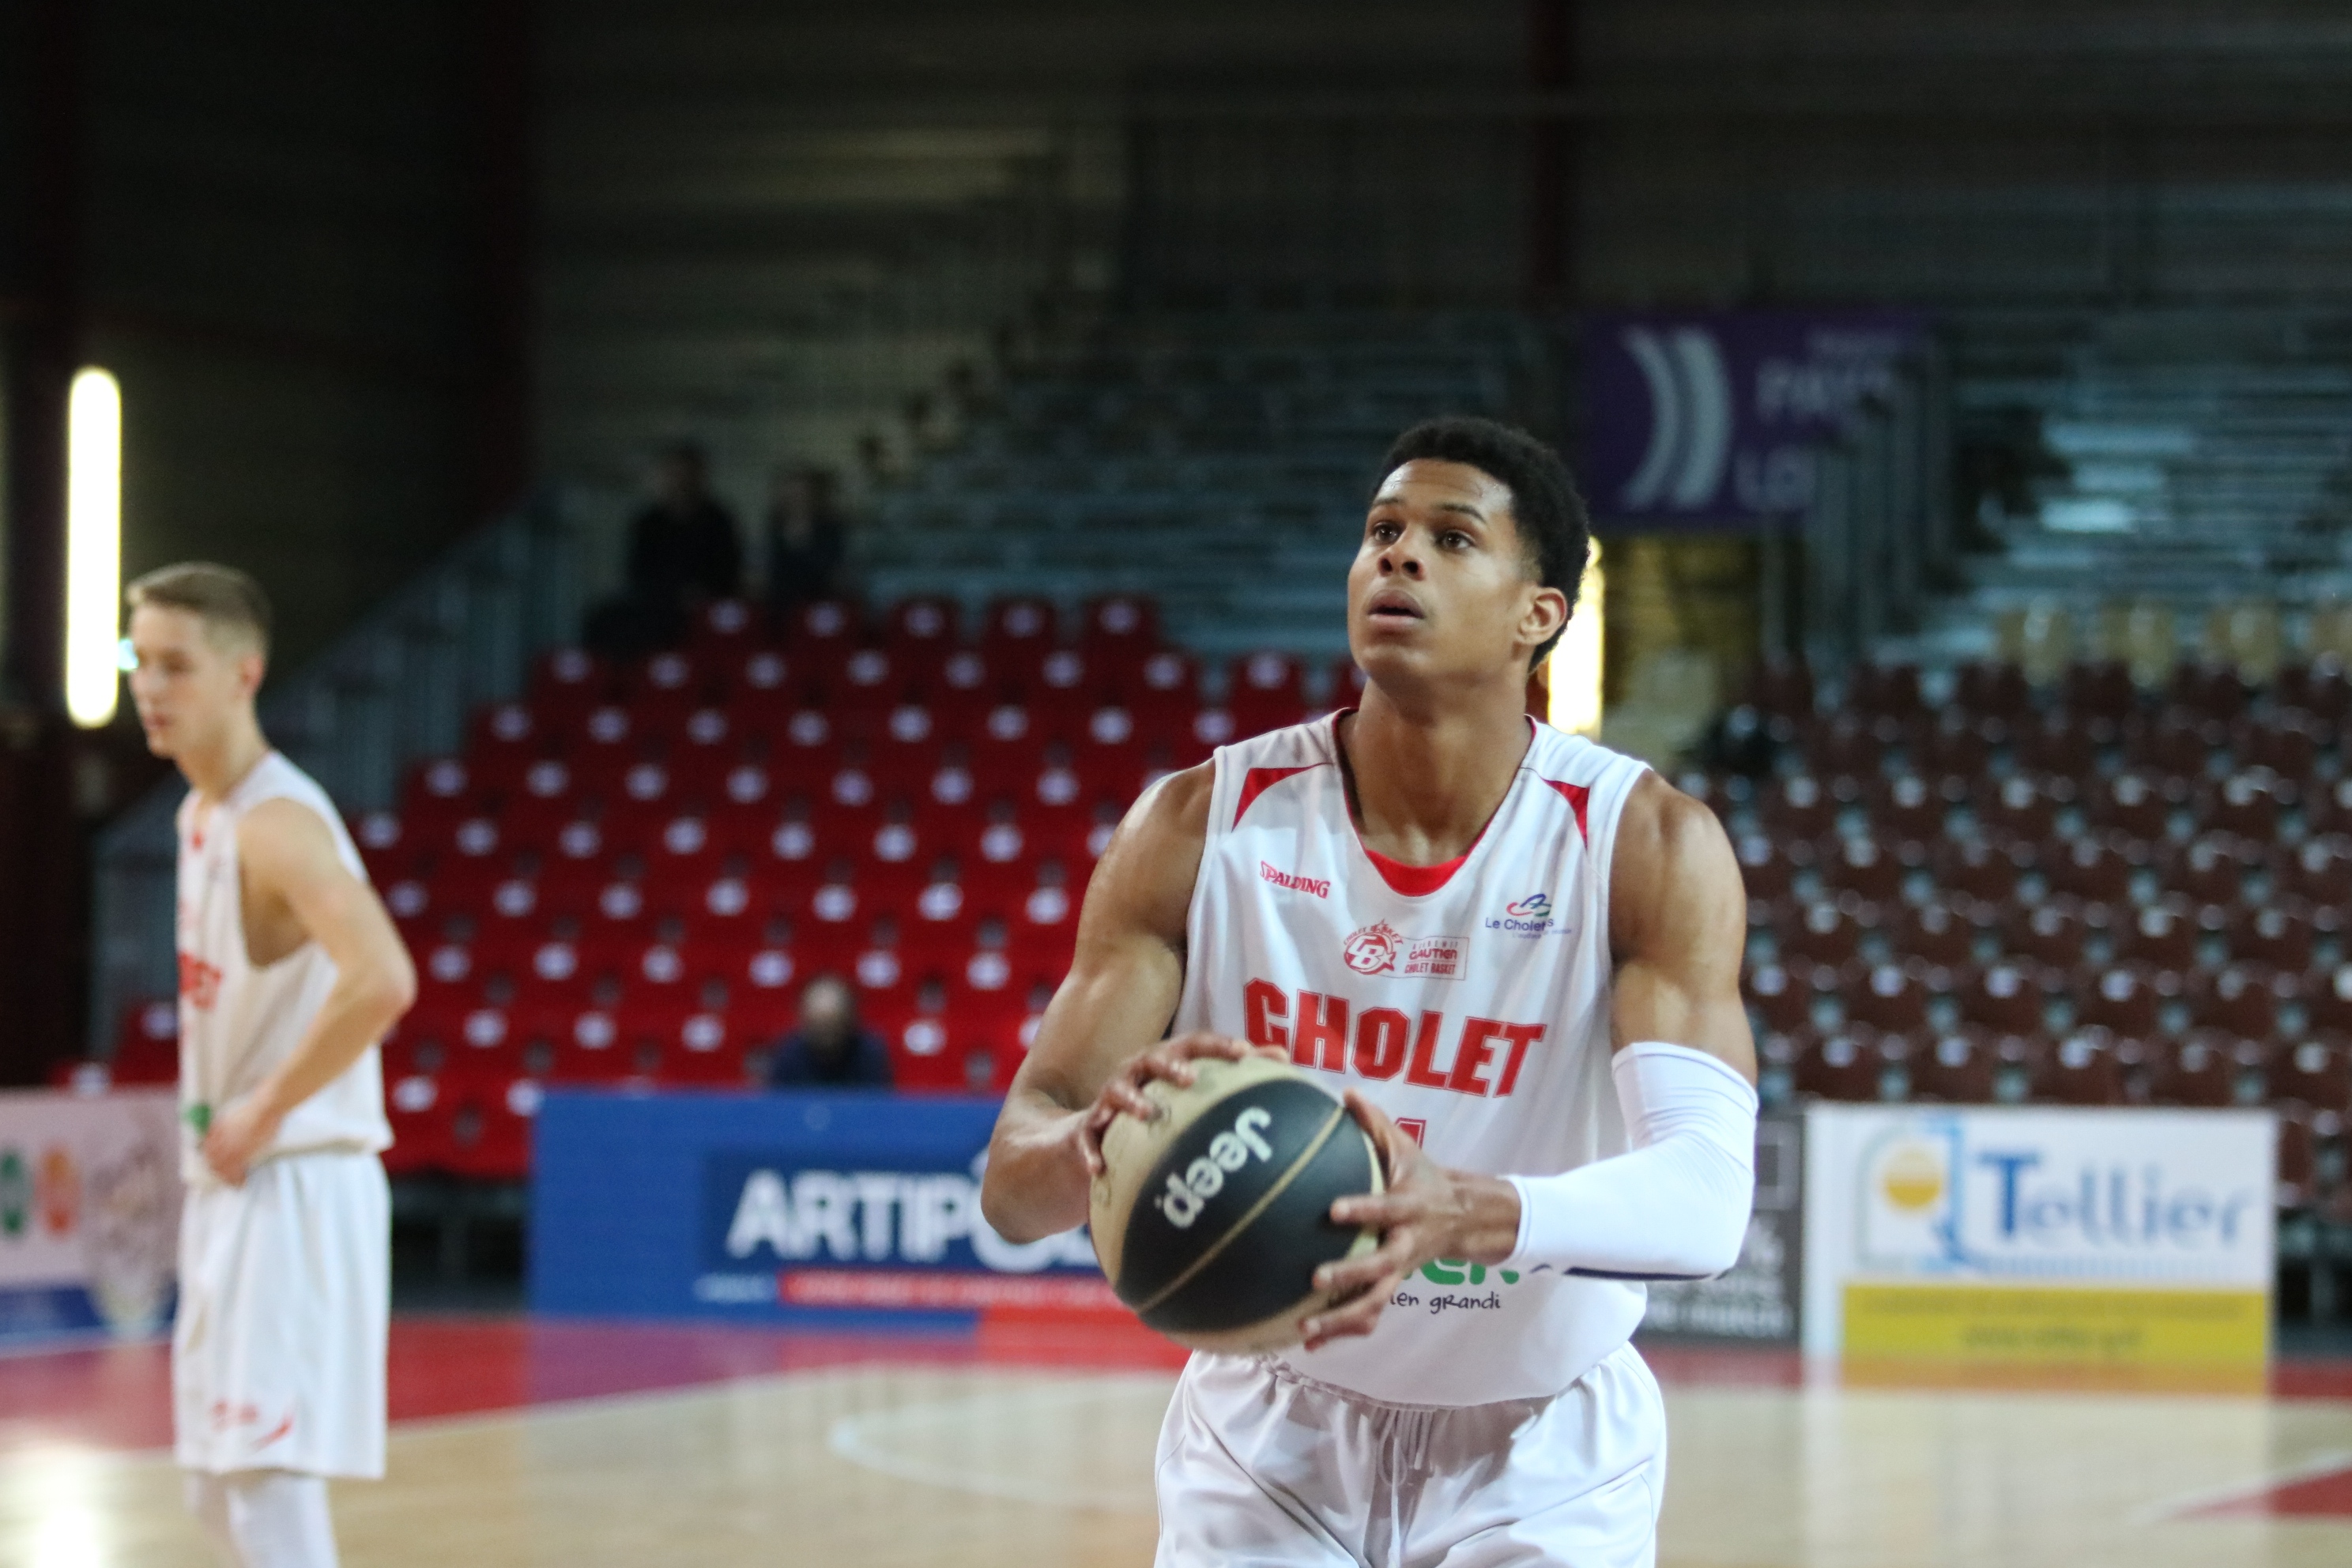 Académie Gautier Cholet Basket U21 - Limoges CSP (13-04-19)